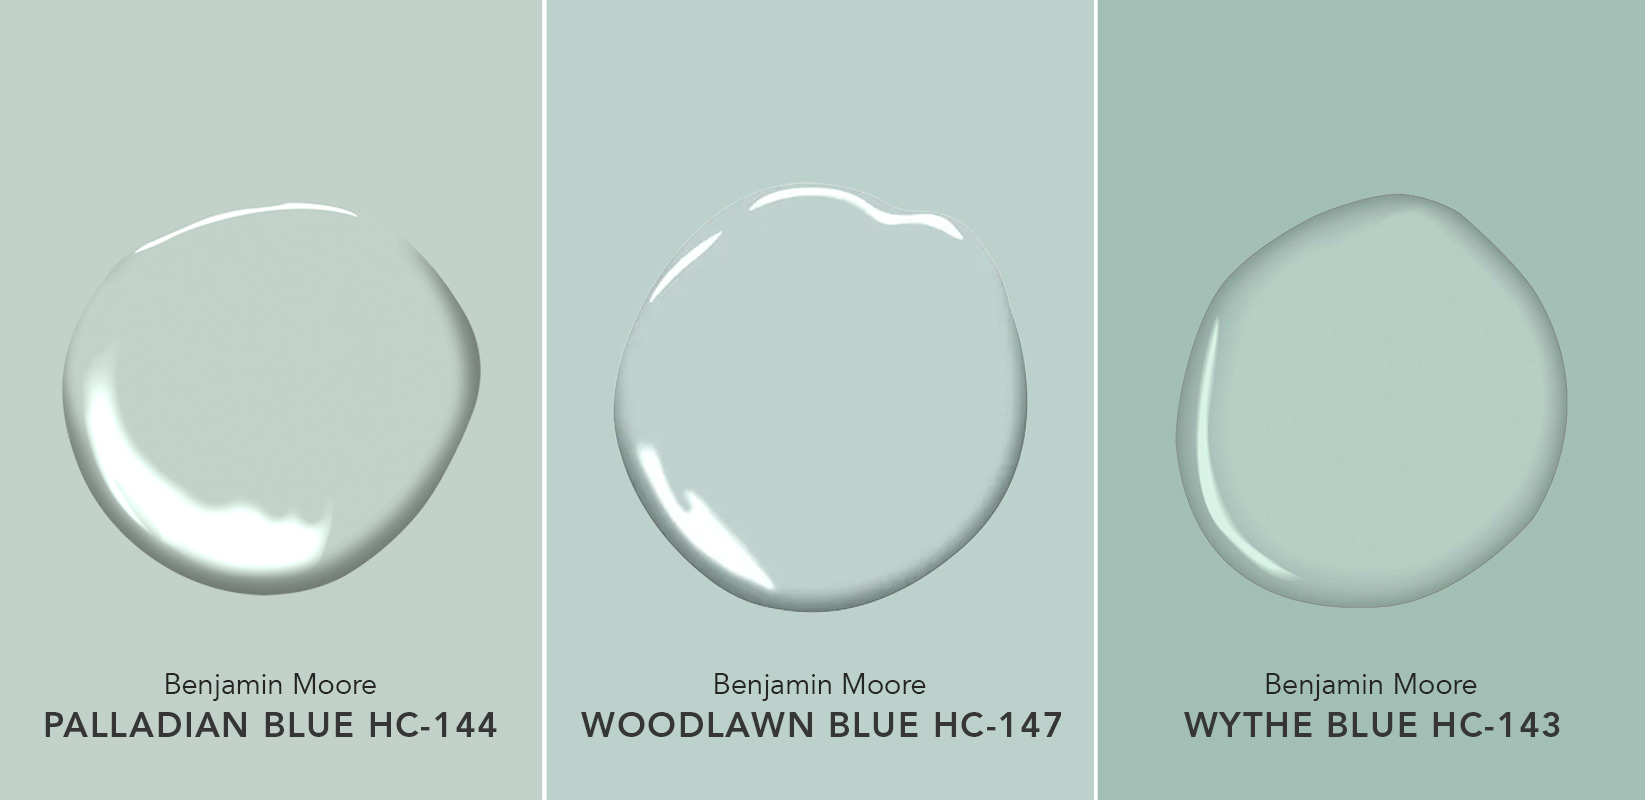 Benjamin Moore blue-greens: Palladian Blue vs. Woodlawn Blue vs. Wythe Blue